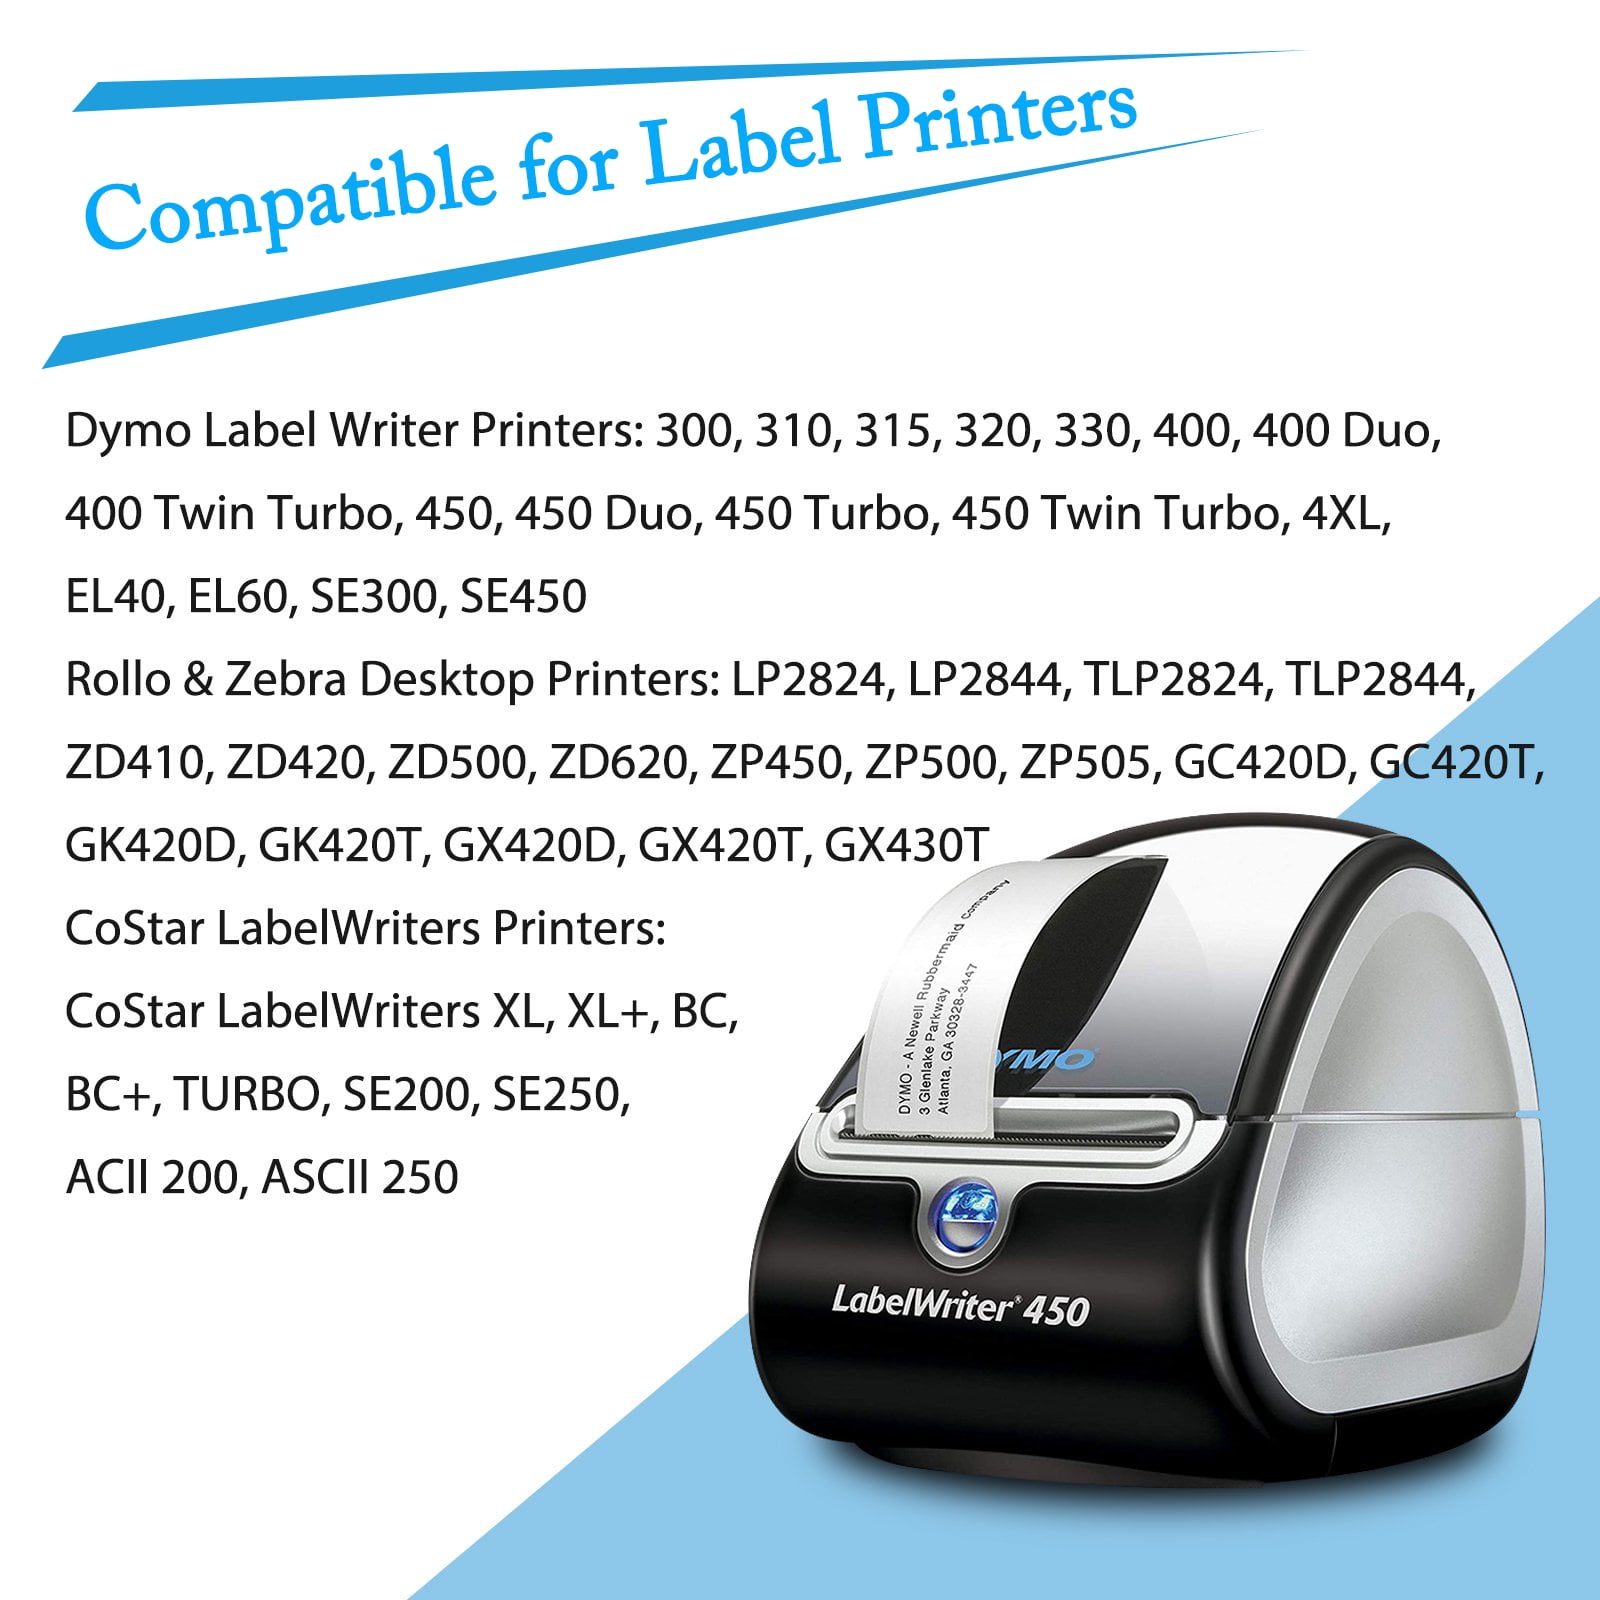 DYMO Rubbermaid LabelWriter 5XL Direct Thermal Printer